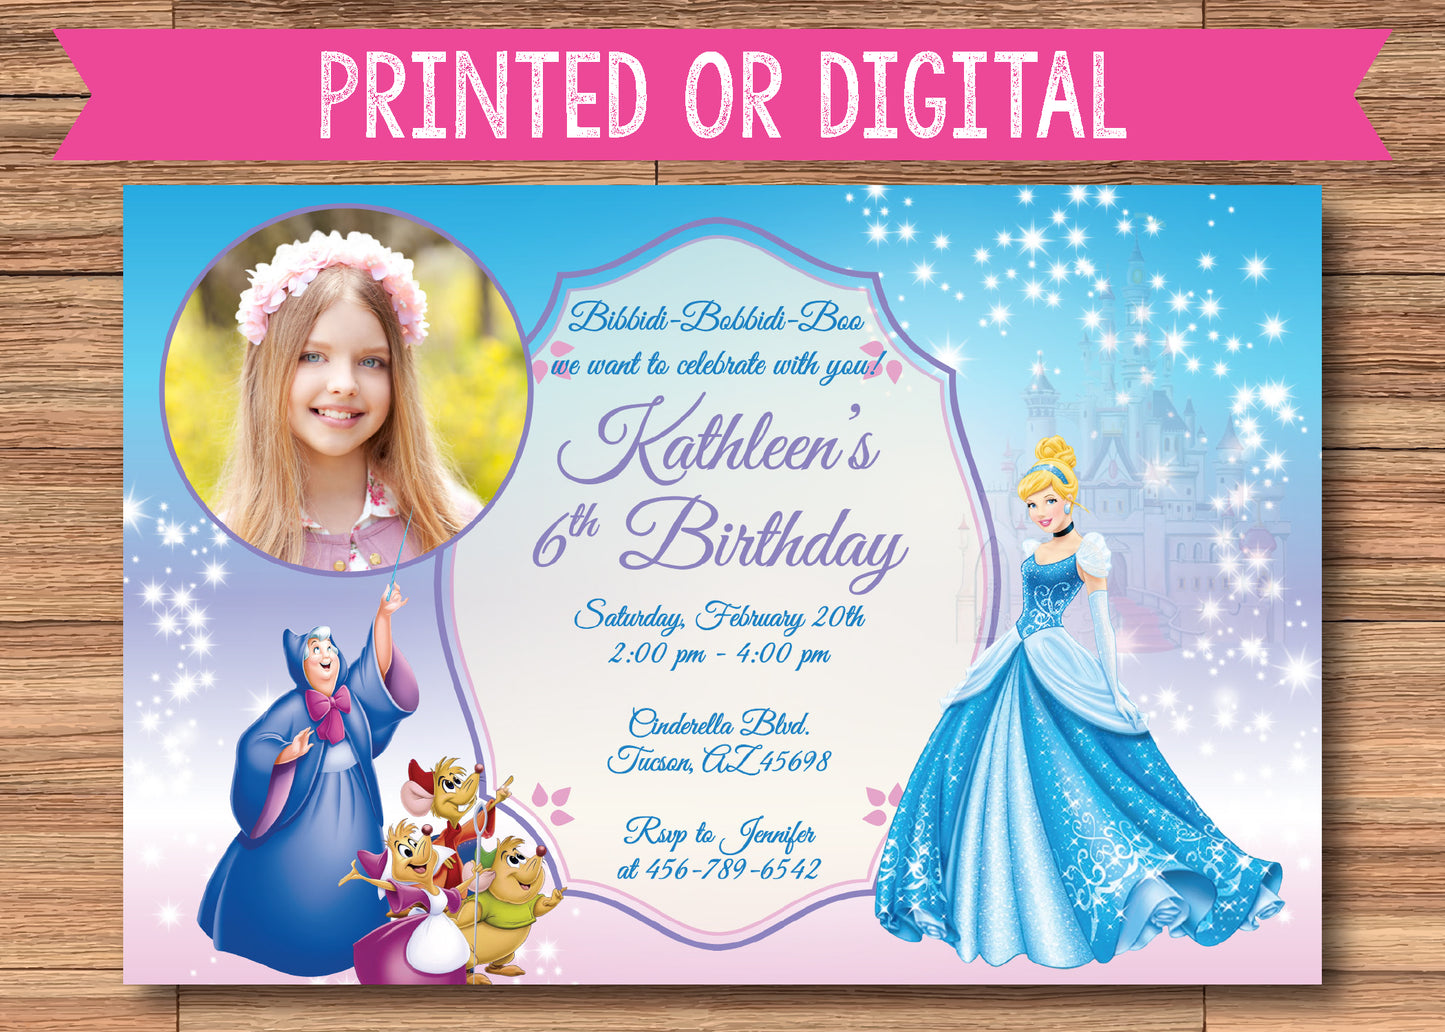 Beautiful CINDERELLA Printed or Digital Birthday Party Invitation With Photo!